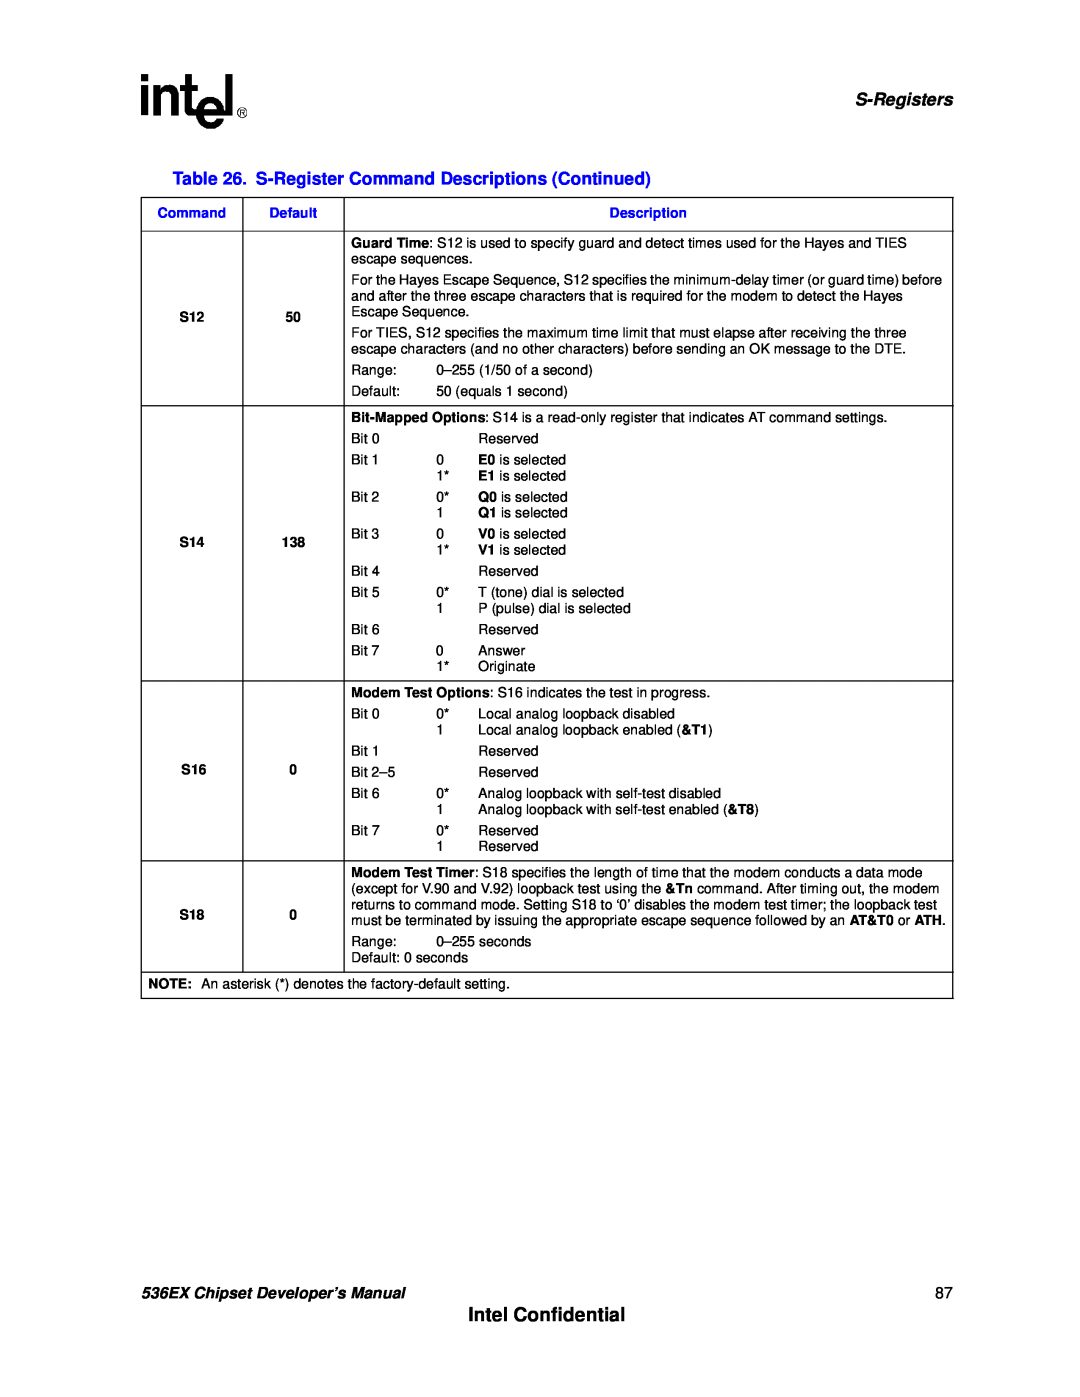 Intel manual Intel Confidential, S-Registers, 536EX Chipset Developer’s Manual 